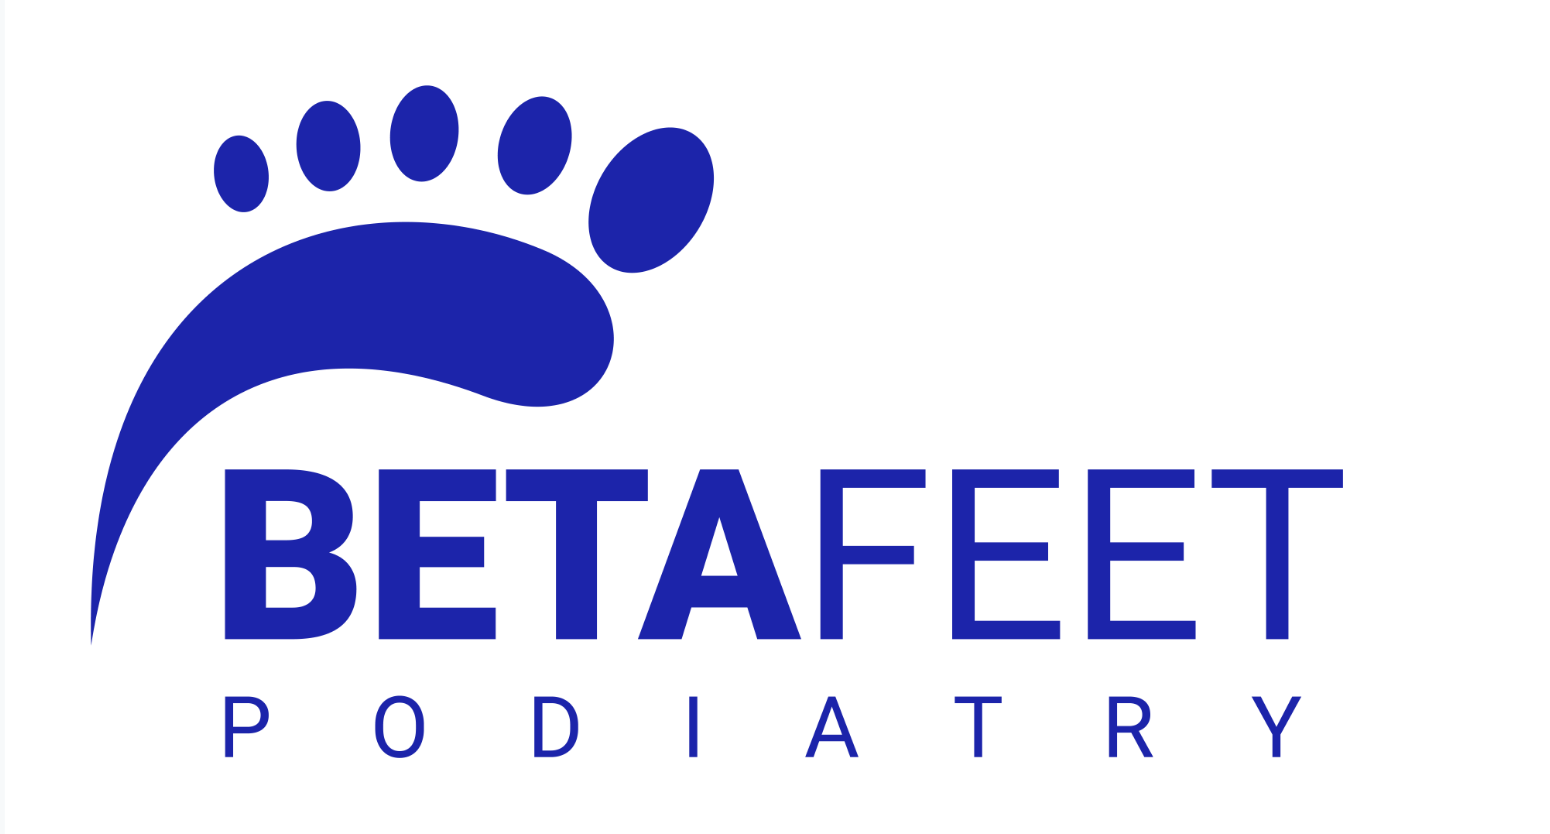 Betafeet Podiatry  logo